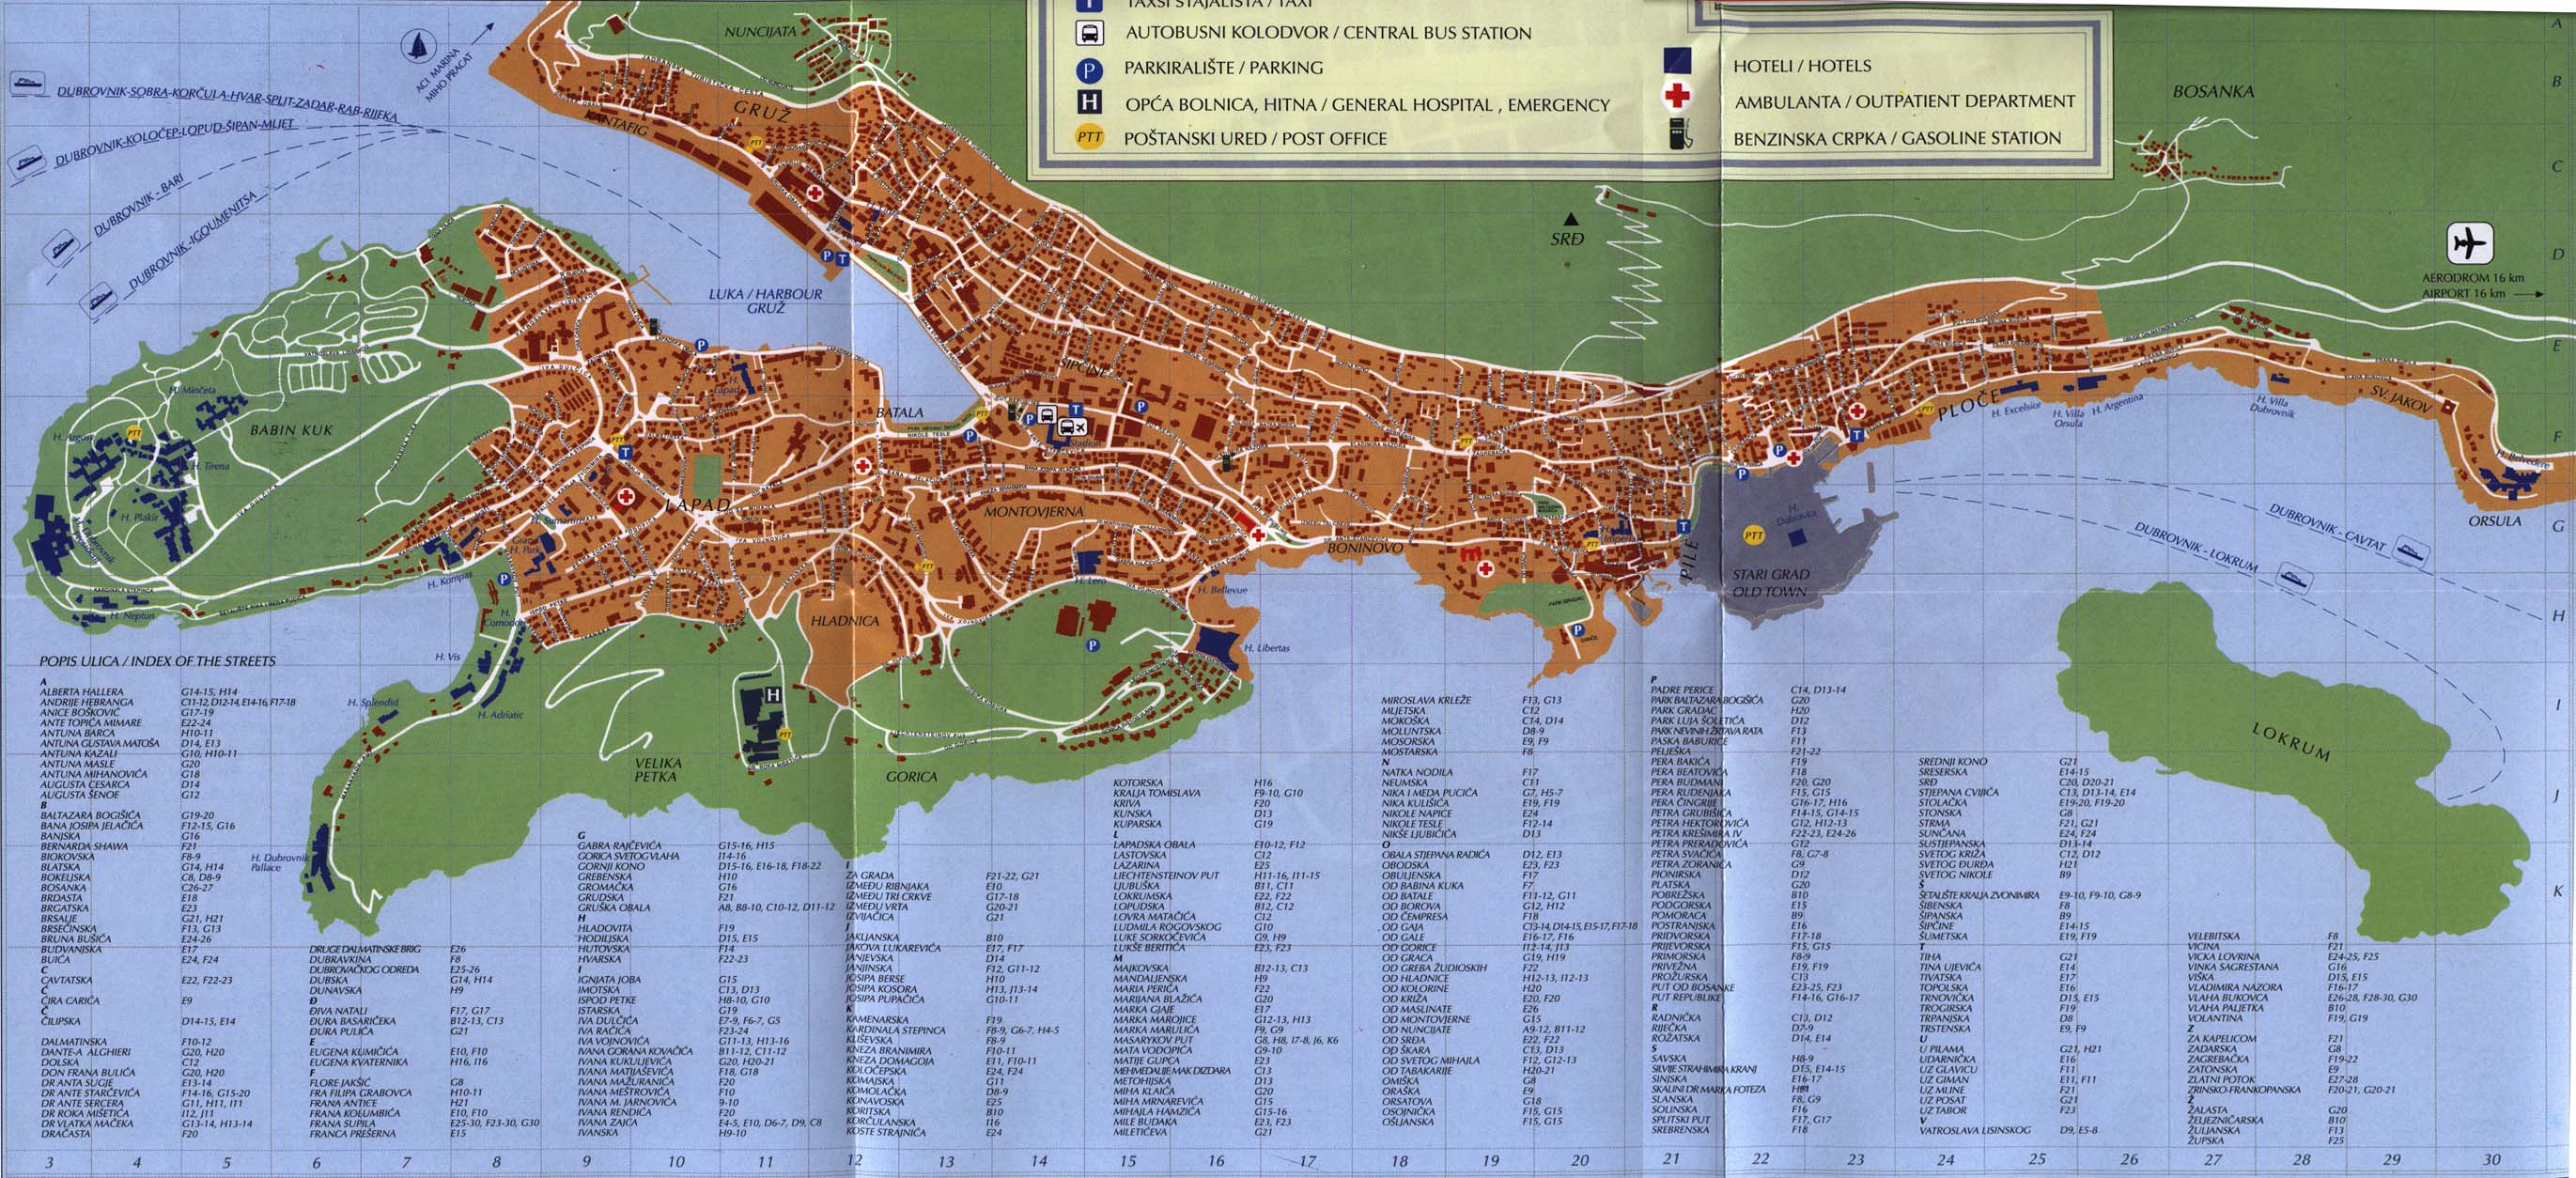 dubrovnik tourist map pdf